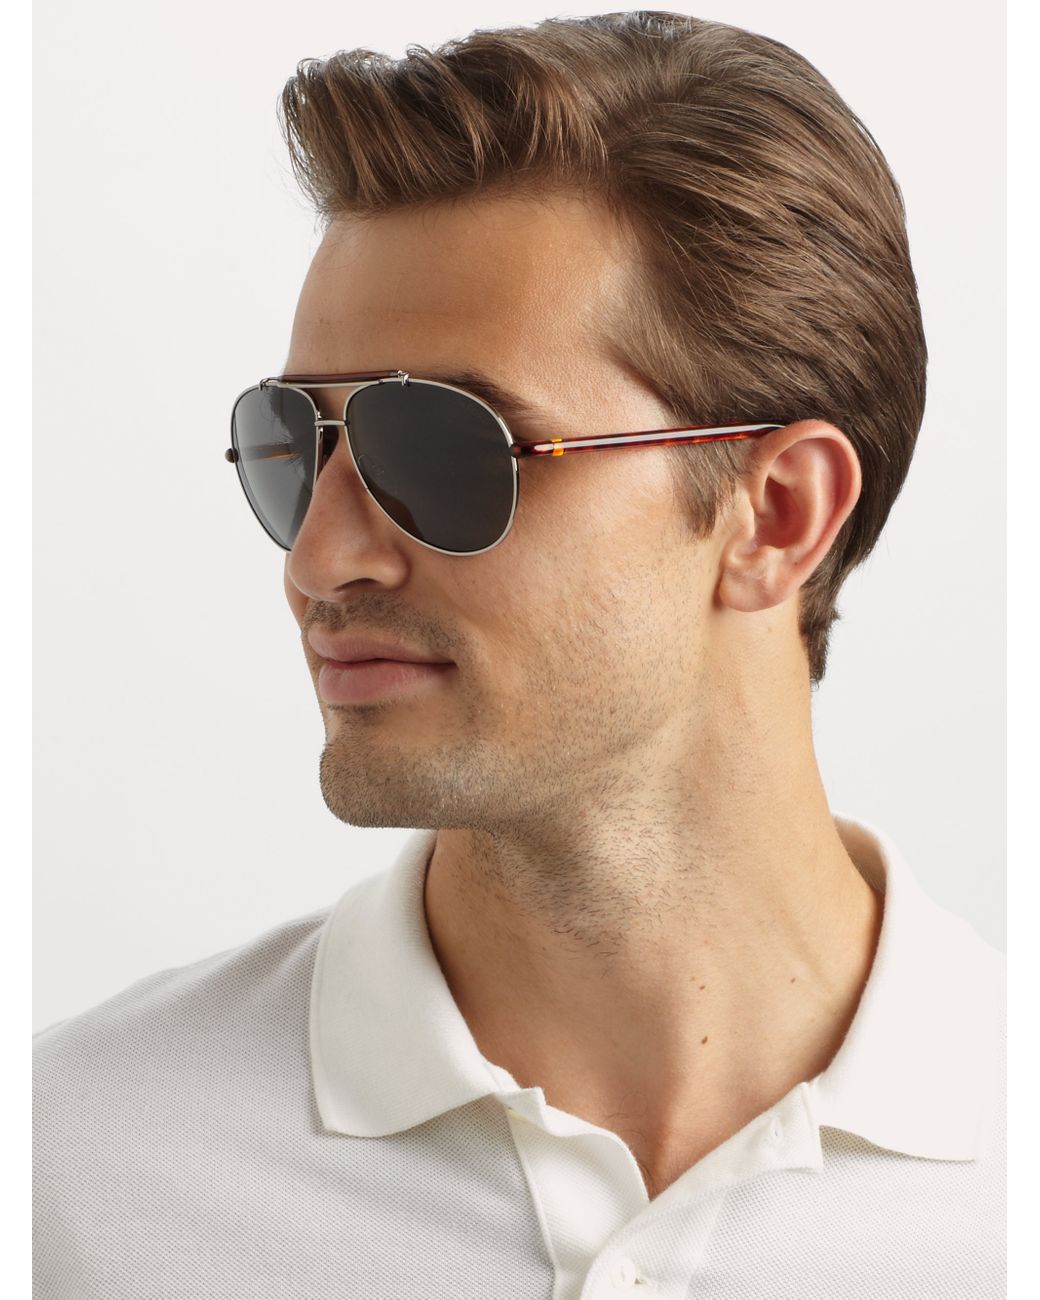 Marco Polo Sjov grube Tom Ford Metal Aviator Sunglasses in Brown for Men | Lyst